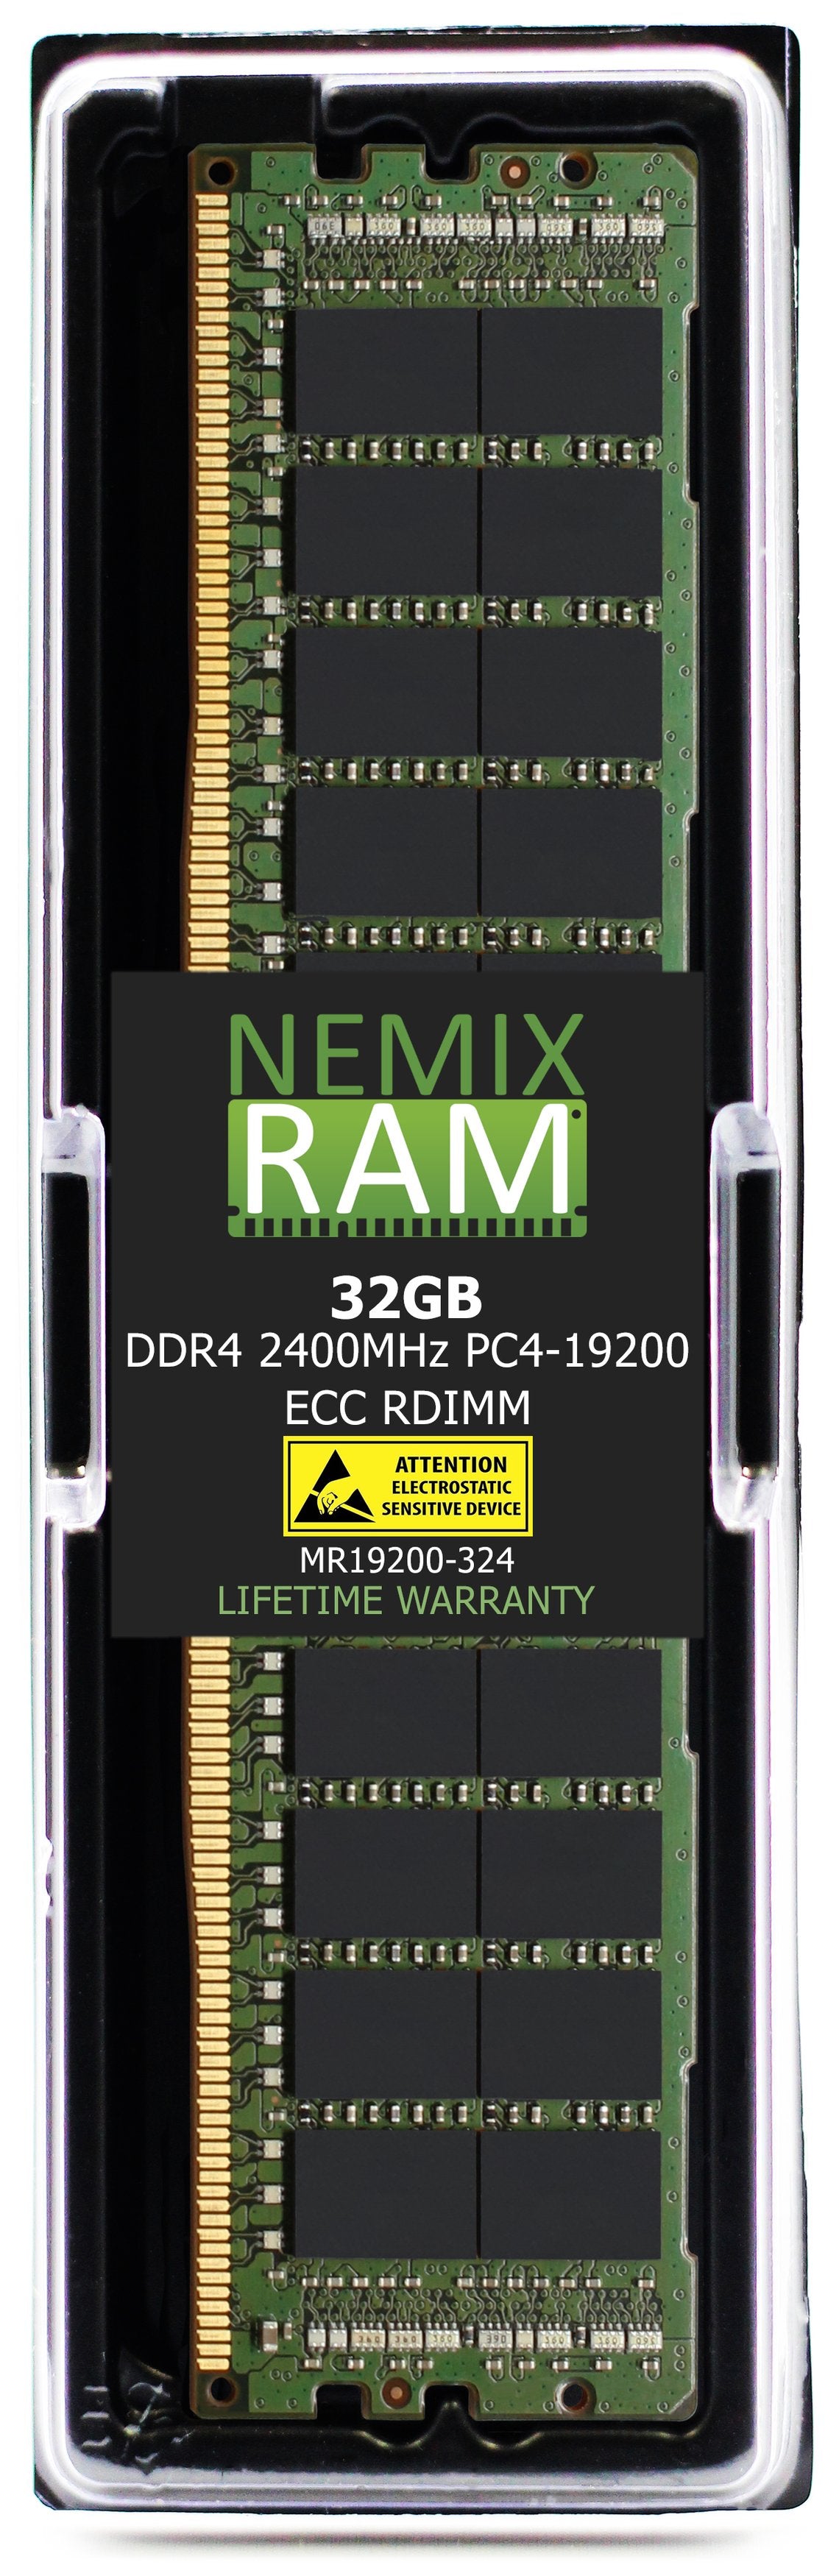 32GB DDR4 2400MHZ PC4-19200 RDIMM Compatible with Supermicro MEM-DR432L-SL01-ER24